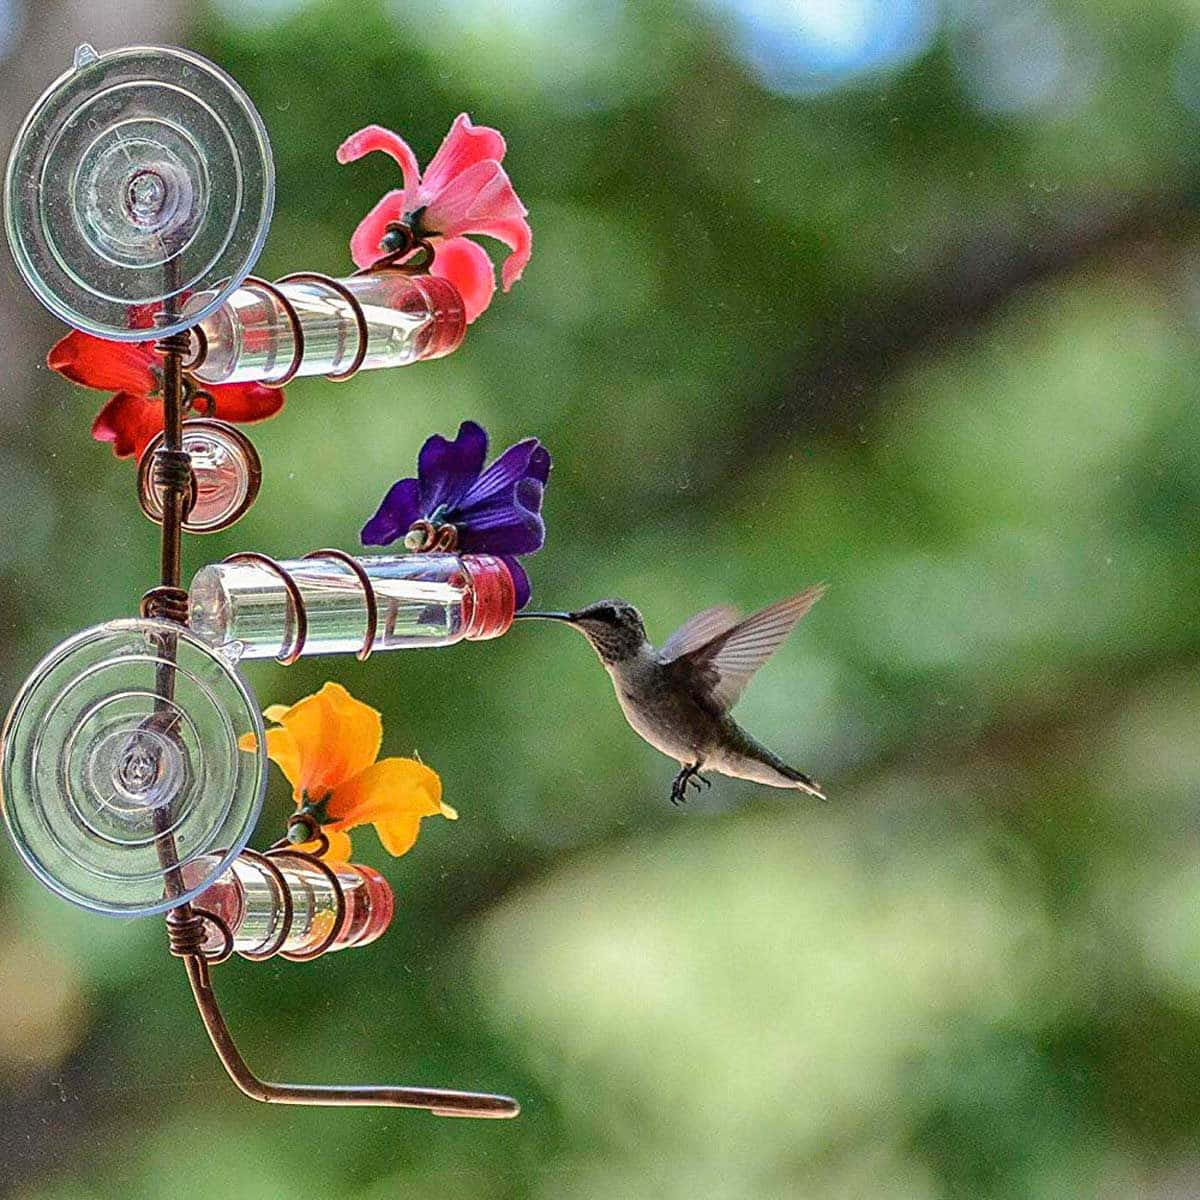 Hummingbird billeder danse over denne farverige tapet.